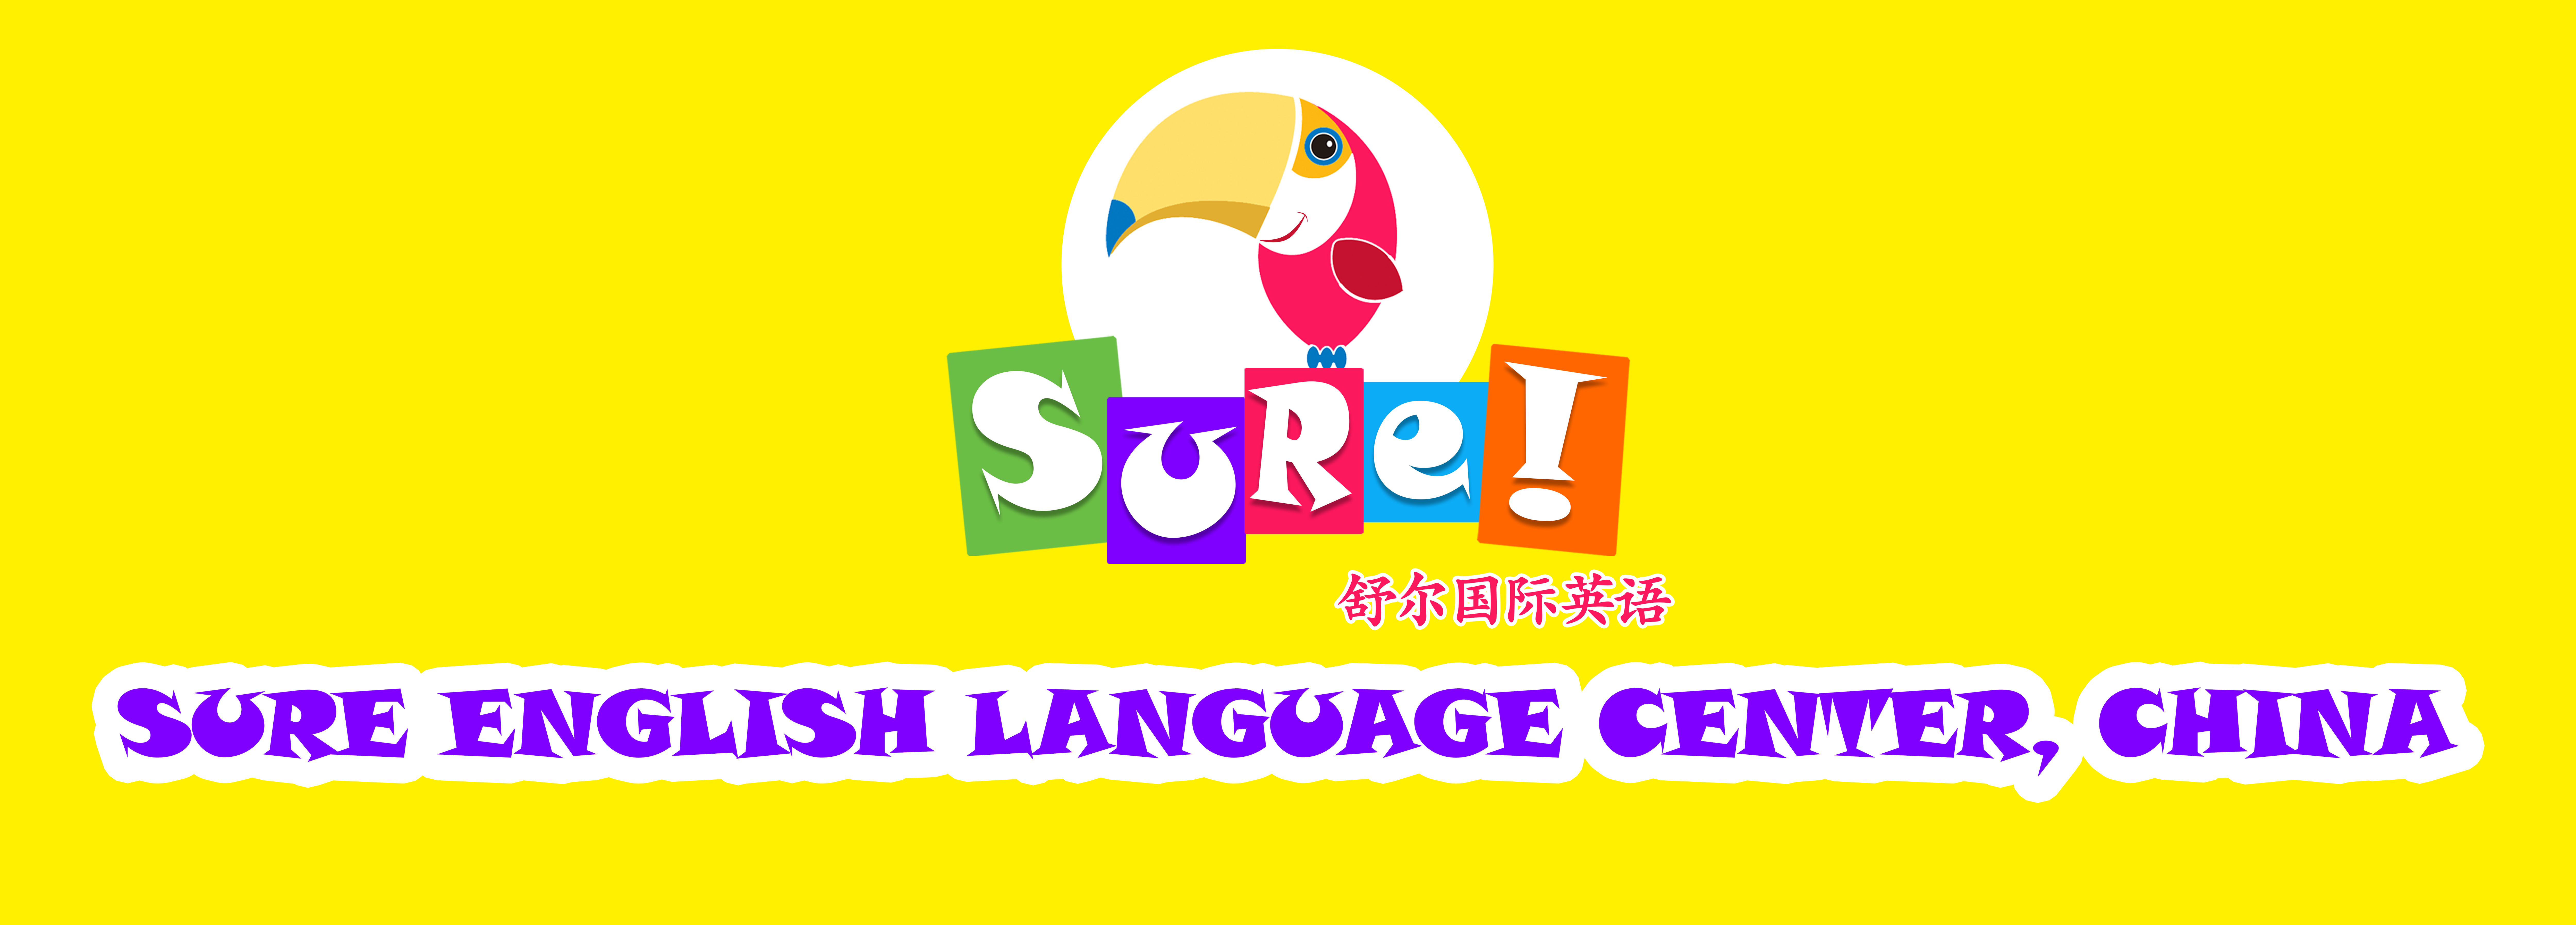 Sure English Language Center - banner